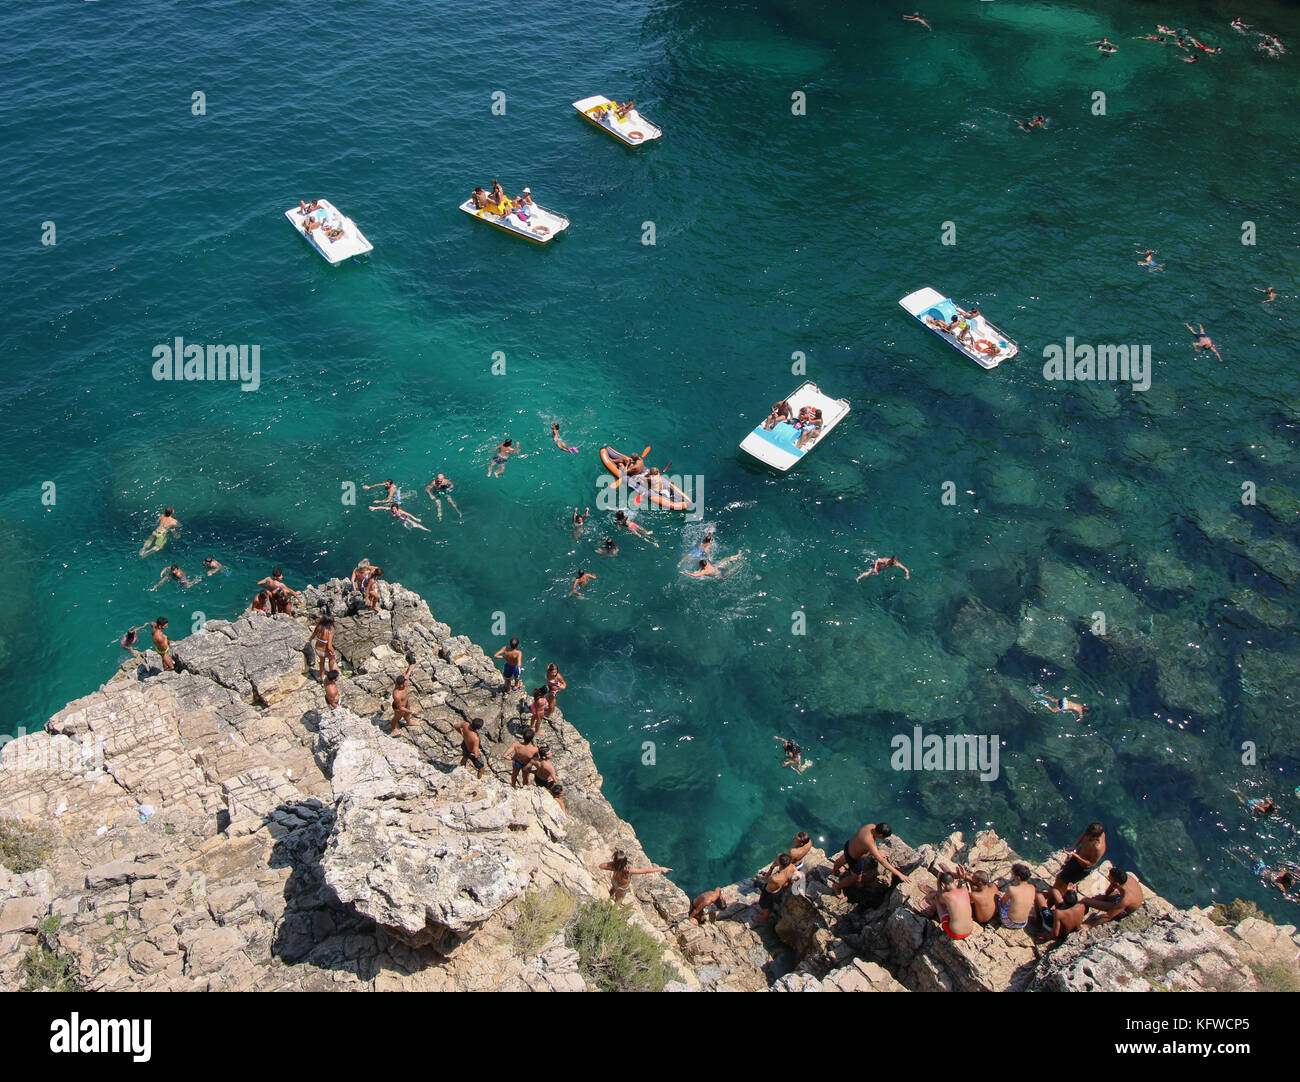 people swimming and on airbeds Polignano a Mare, Adriatic coastline, coastline, Puglia, Italy, Europe. Stock Photo